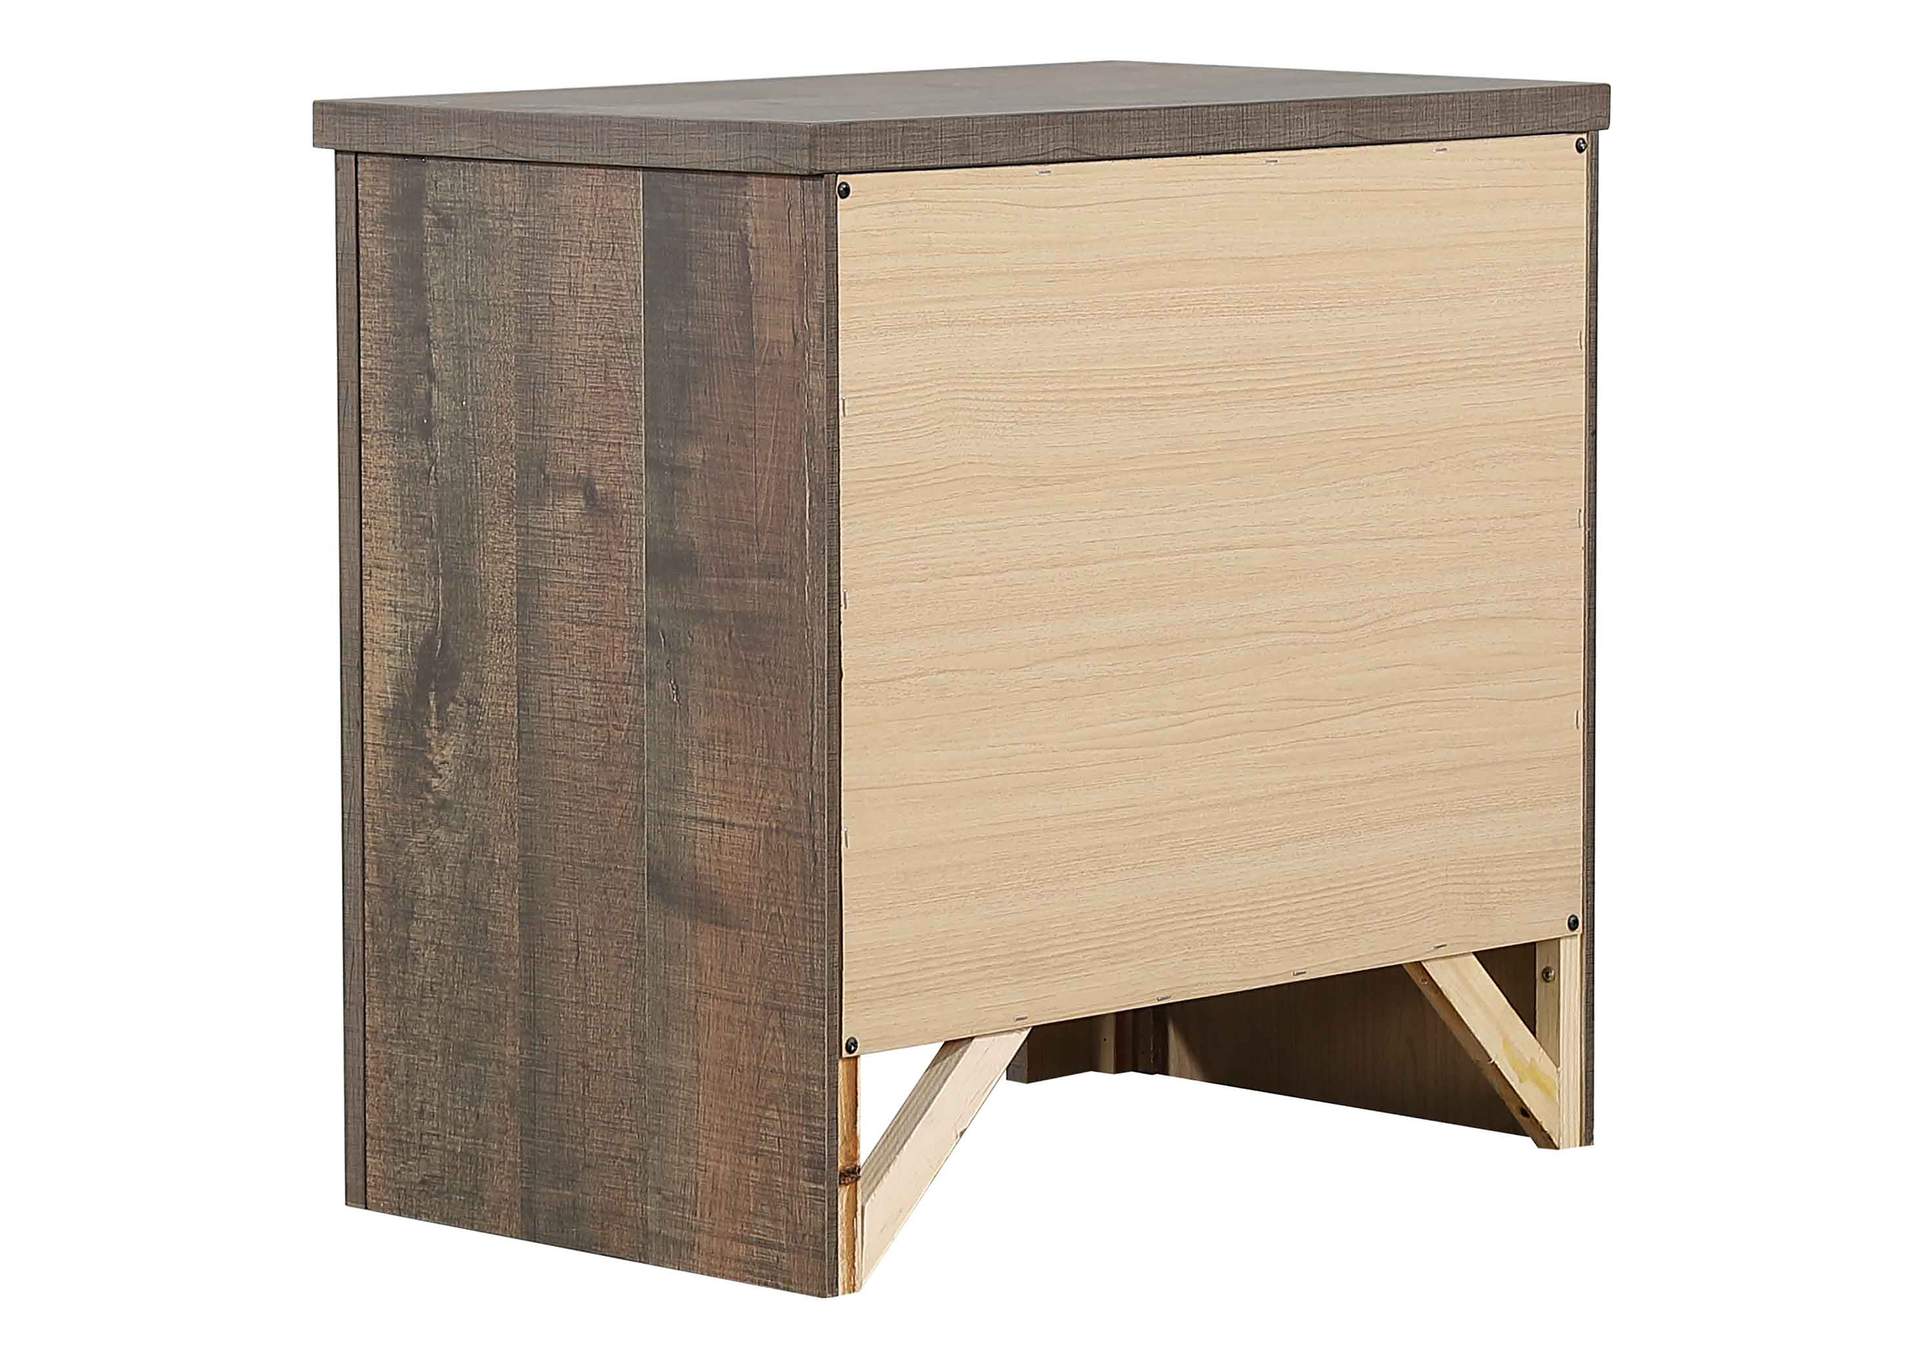 Frederick 2-drawer Nightstand Weathered Oak,Coaster Furniture